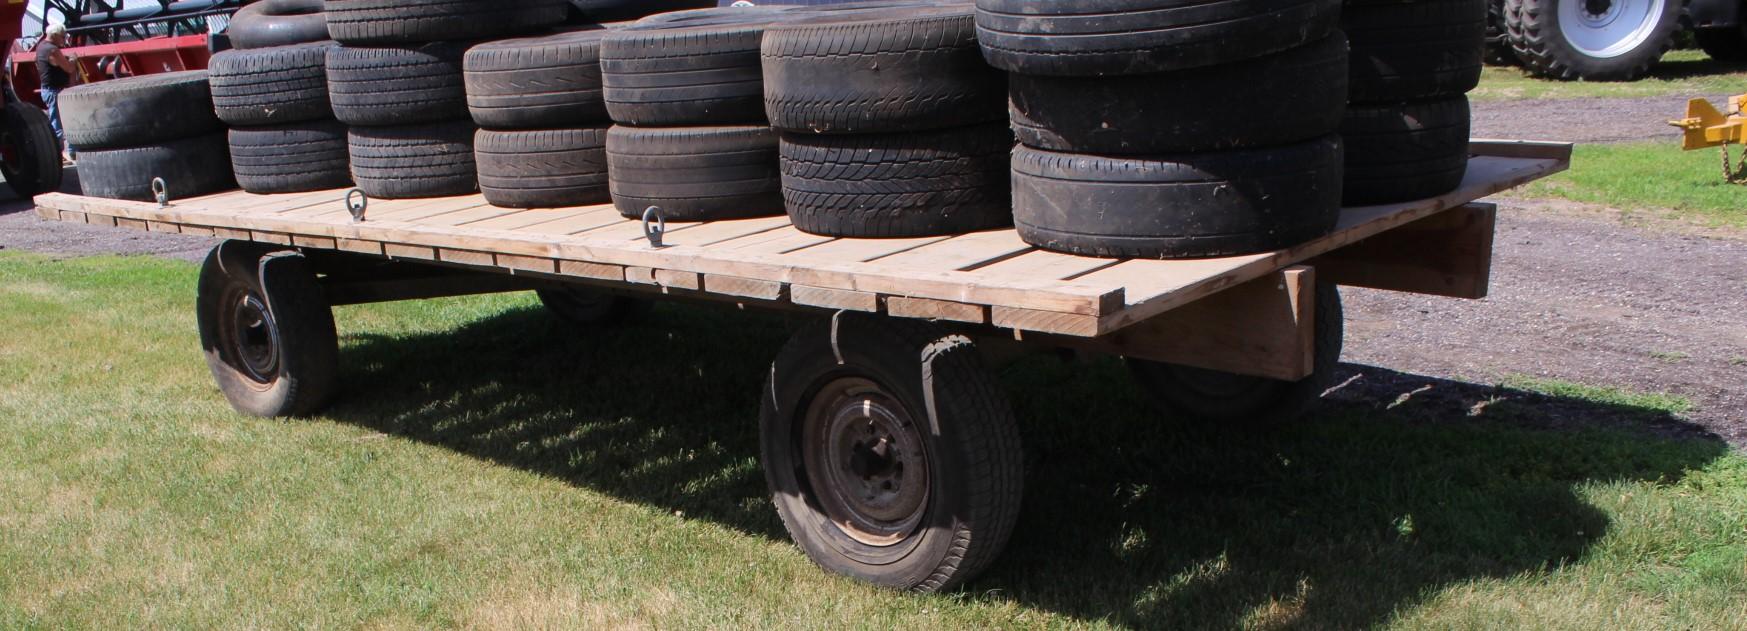 Flat Rack on 4 Wheel Gear, 8’x15’10” Wood Deck